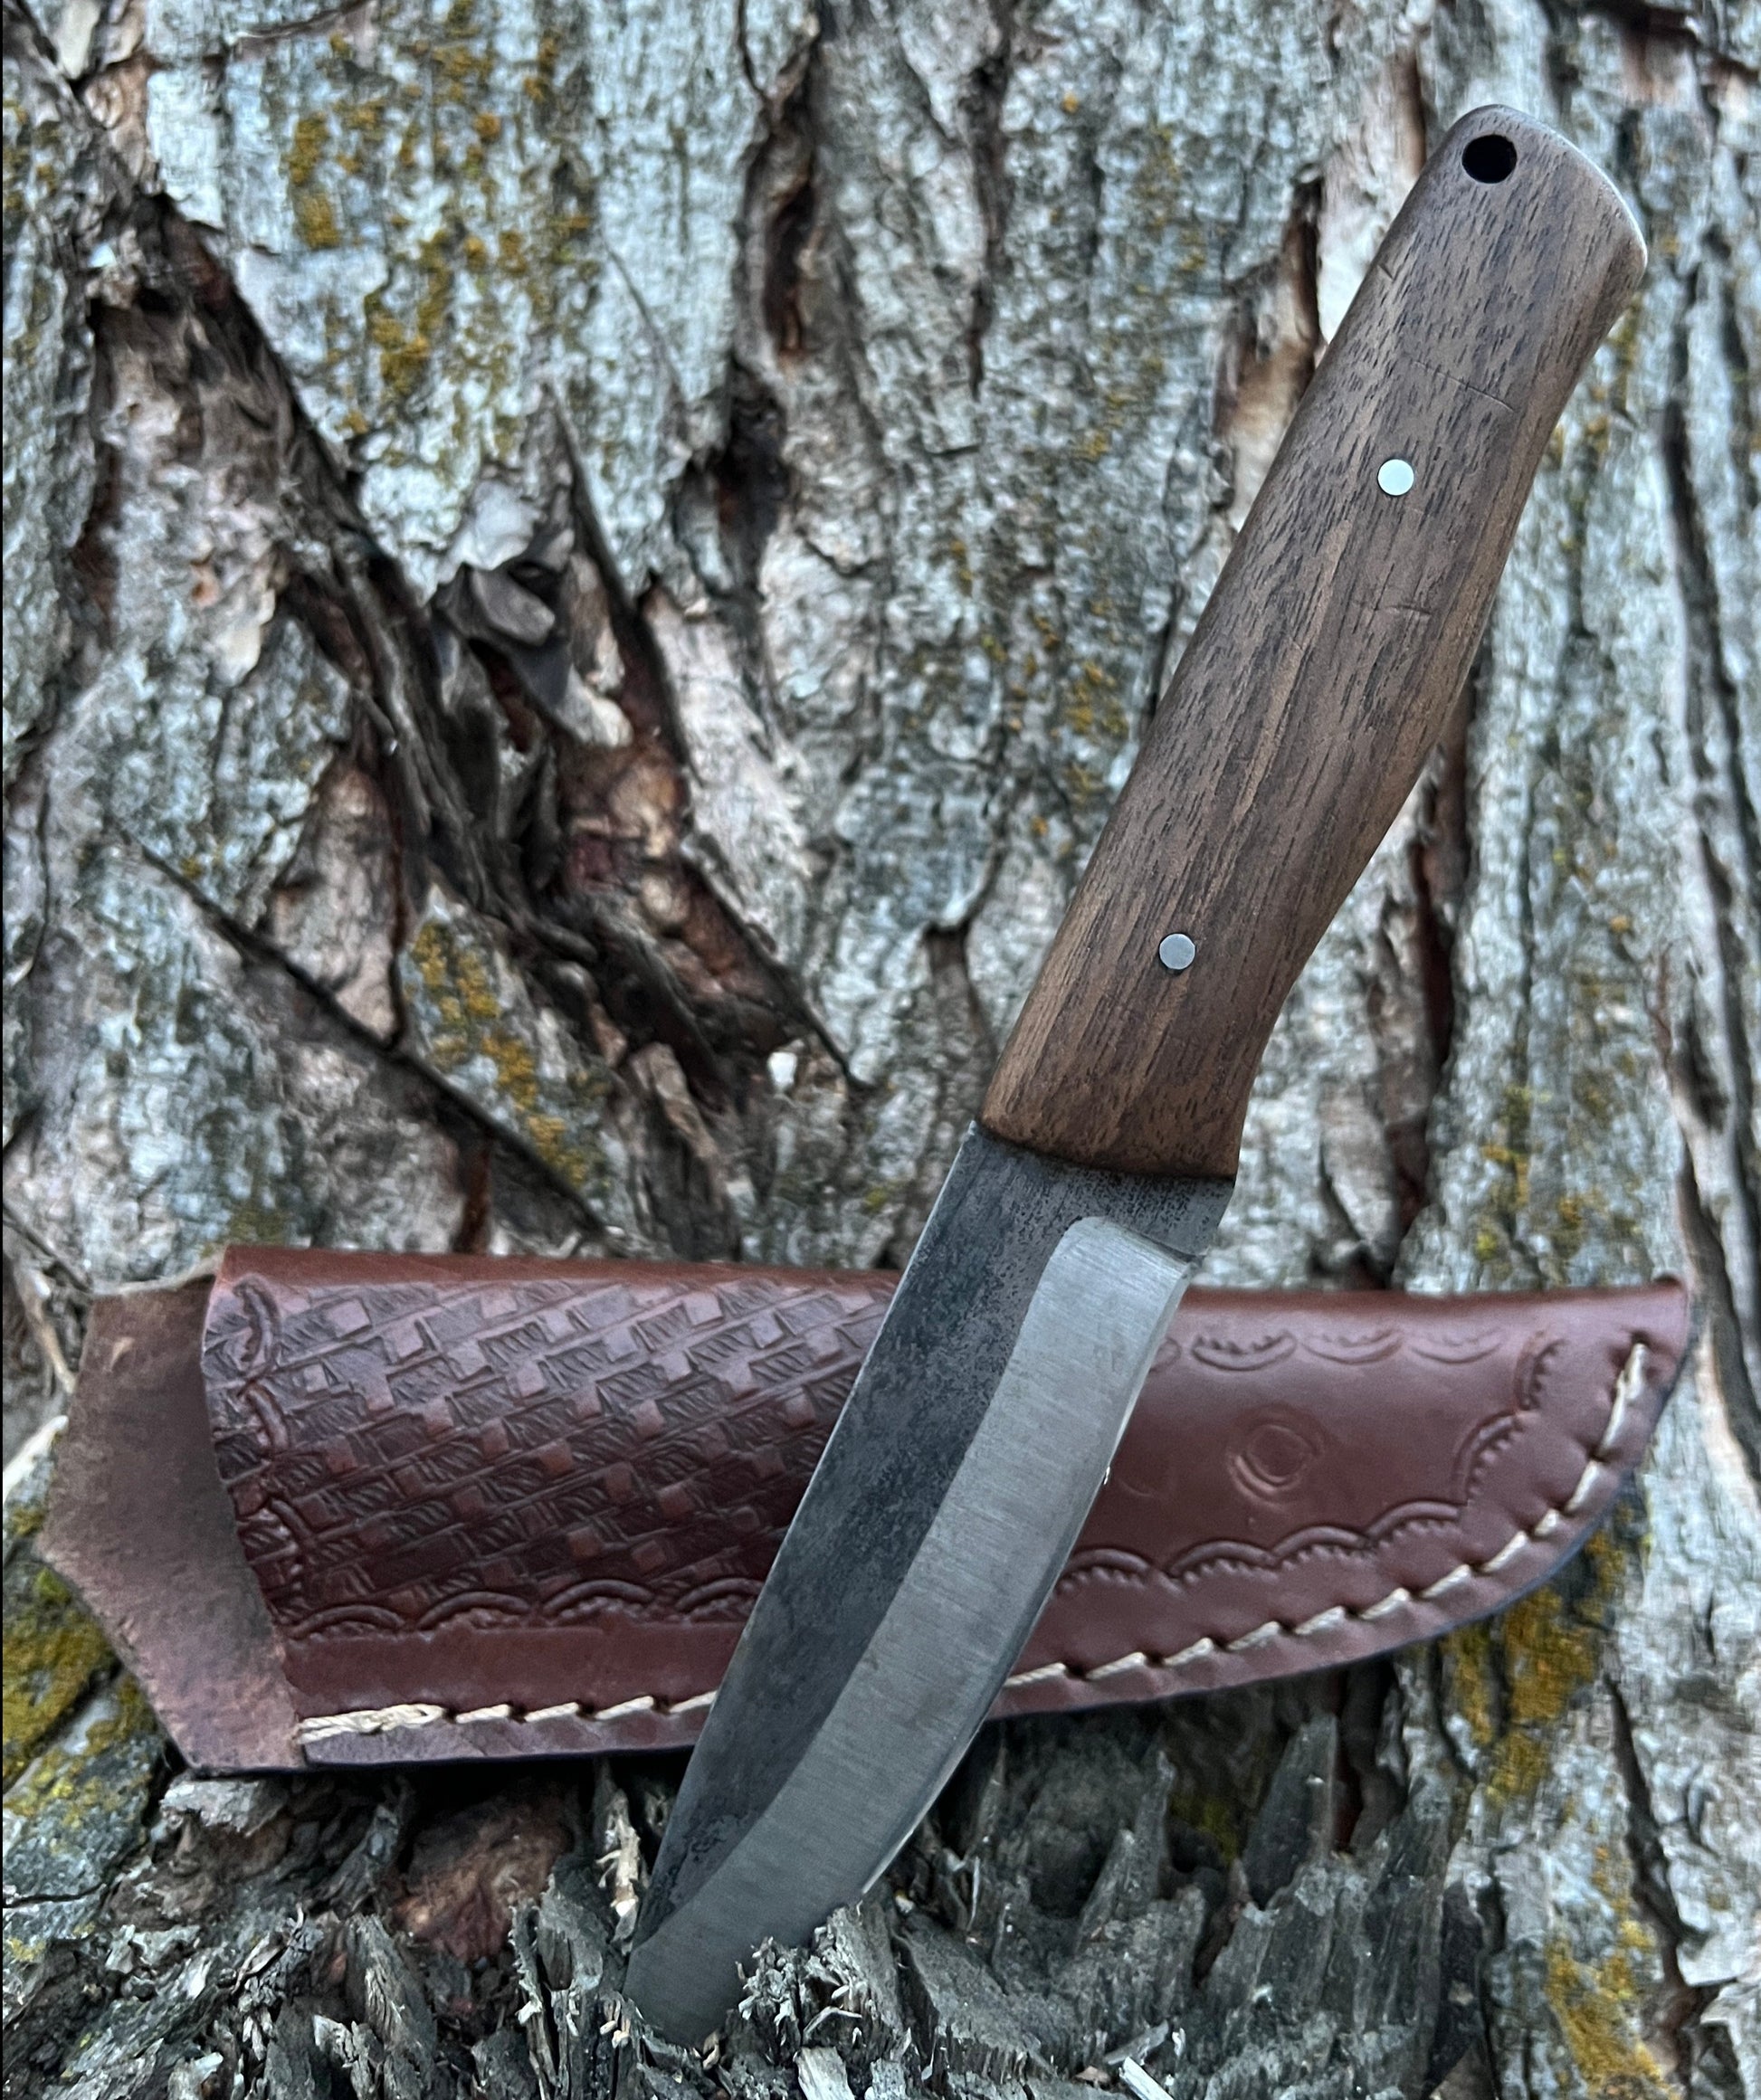 Survival knife on tree stump with leather sheath